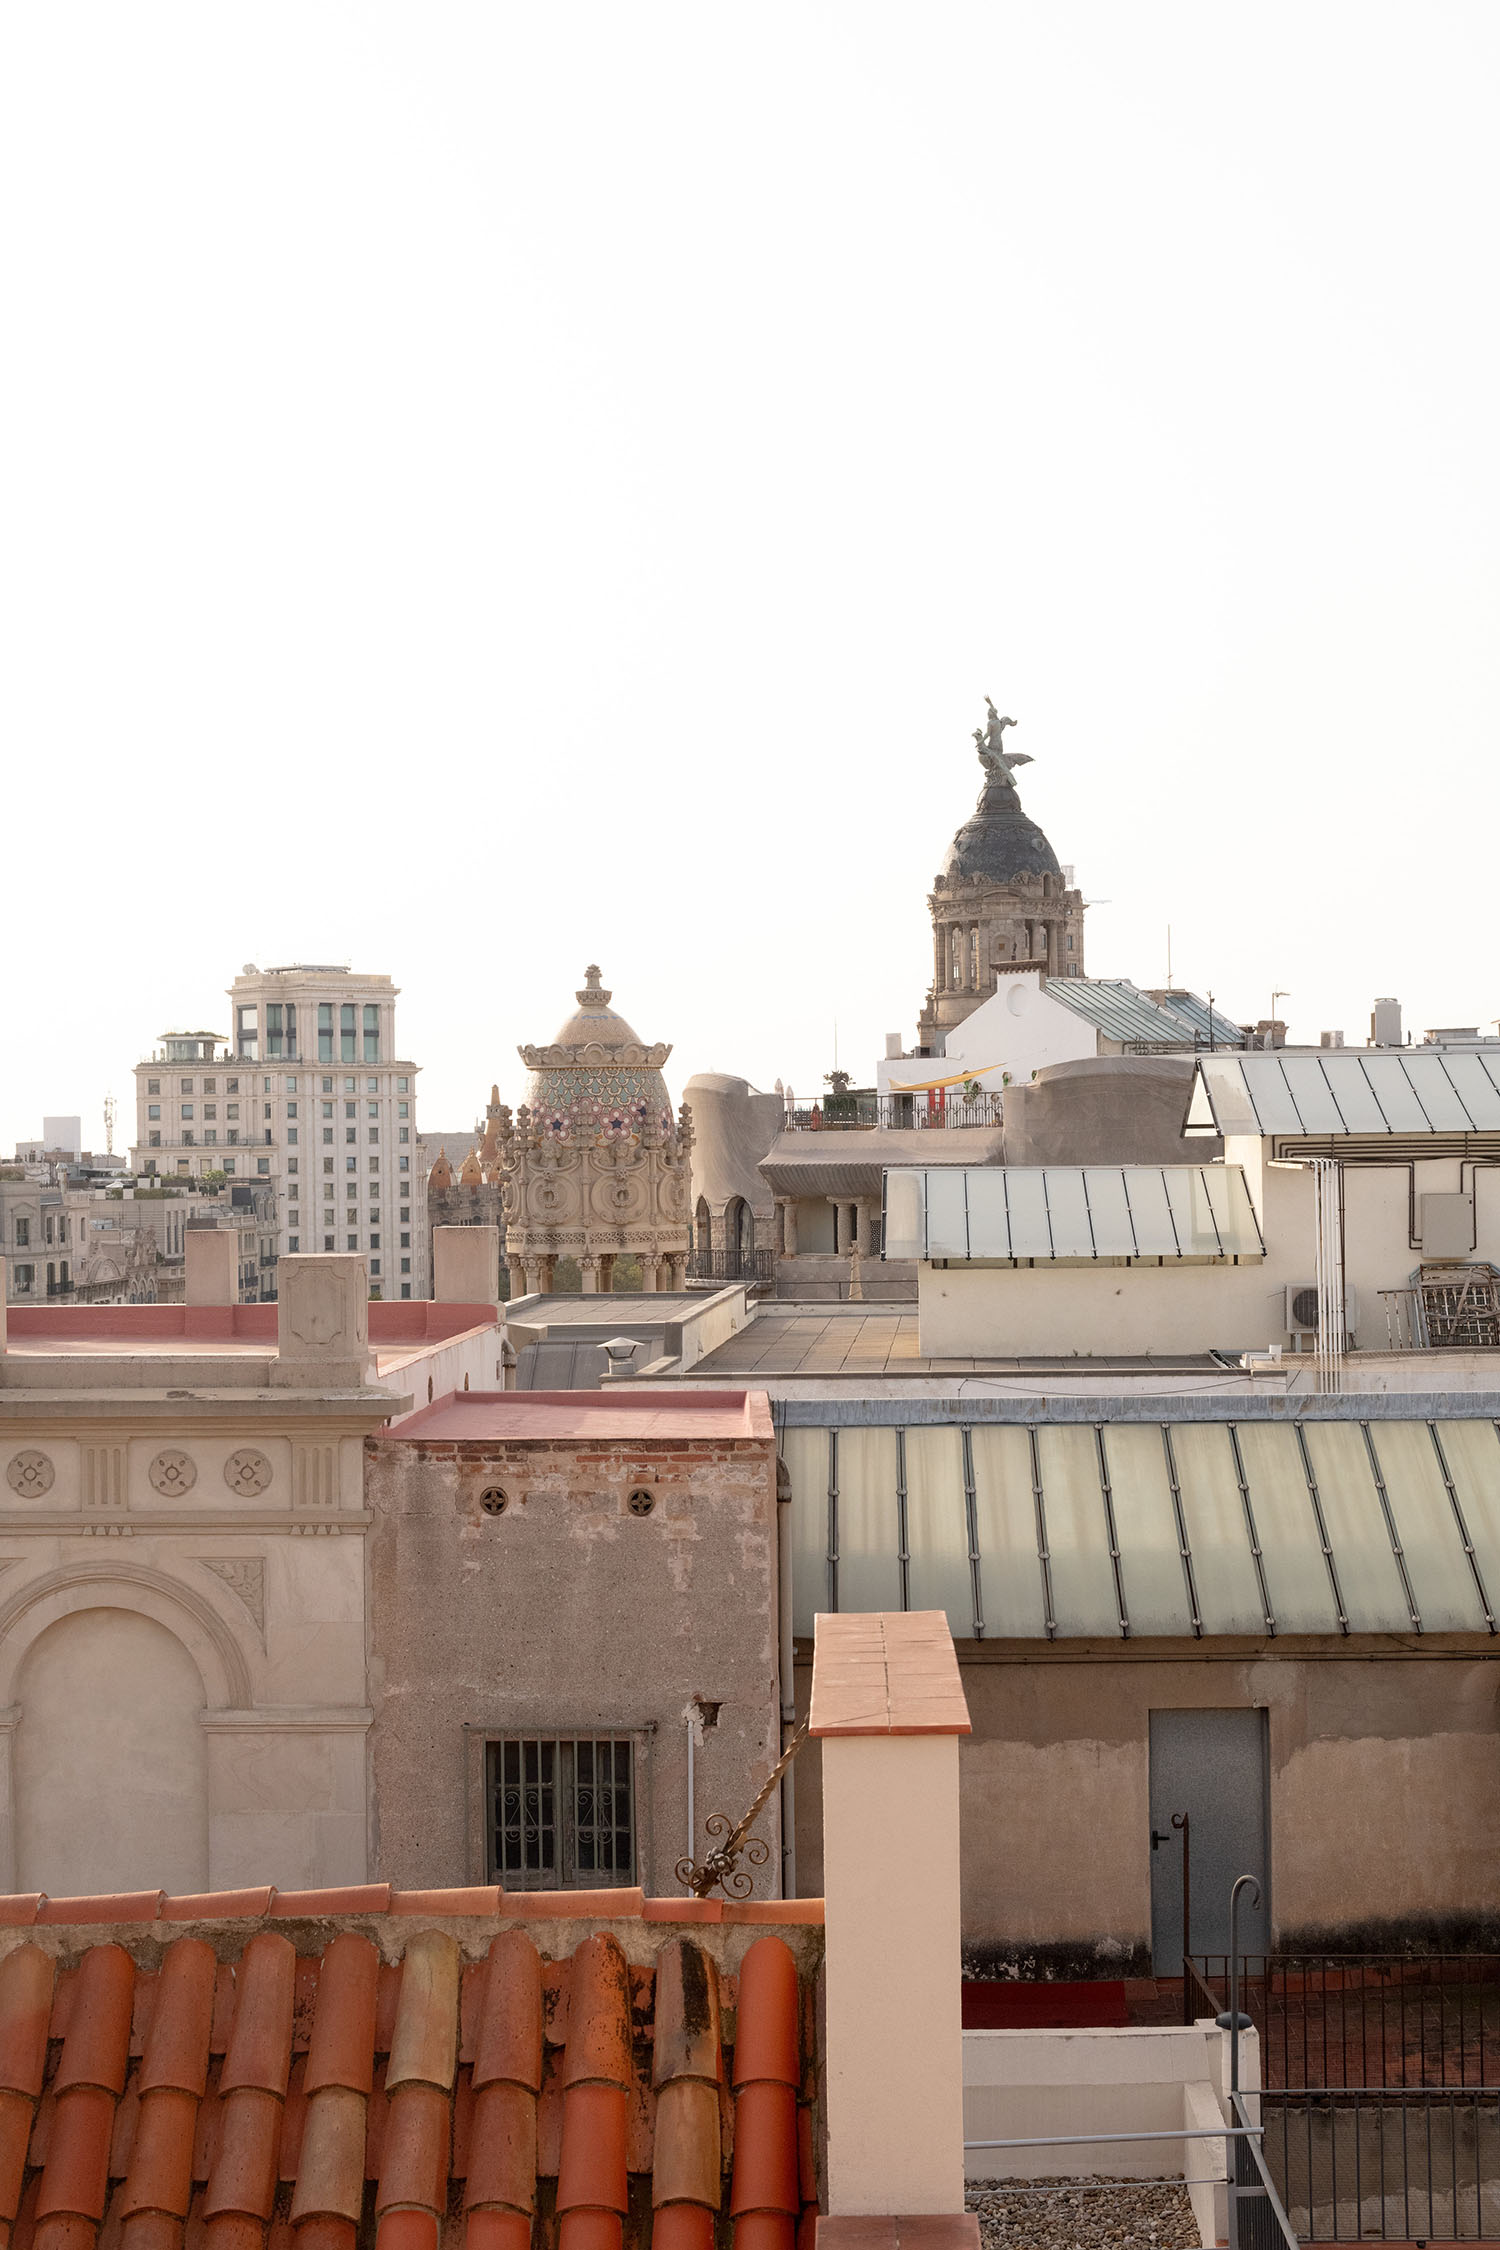 Coco & Voltaire - Rooftops of Barcelona seen from Casa Batllo